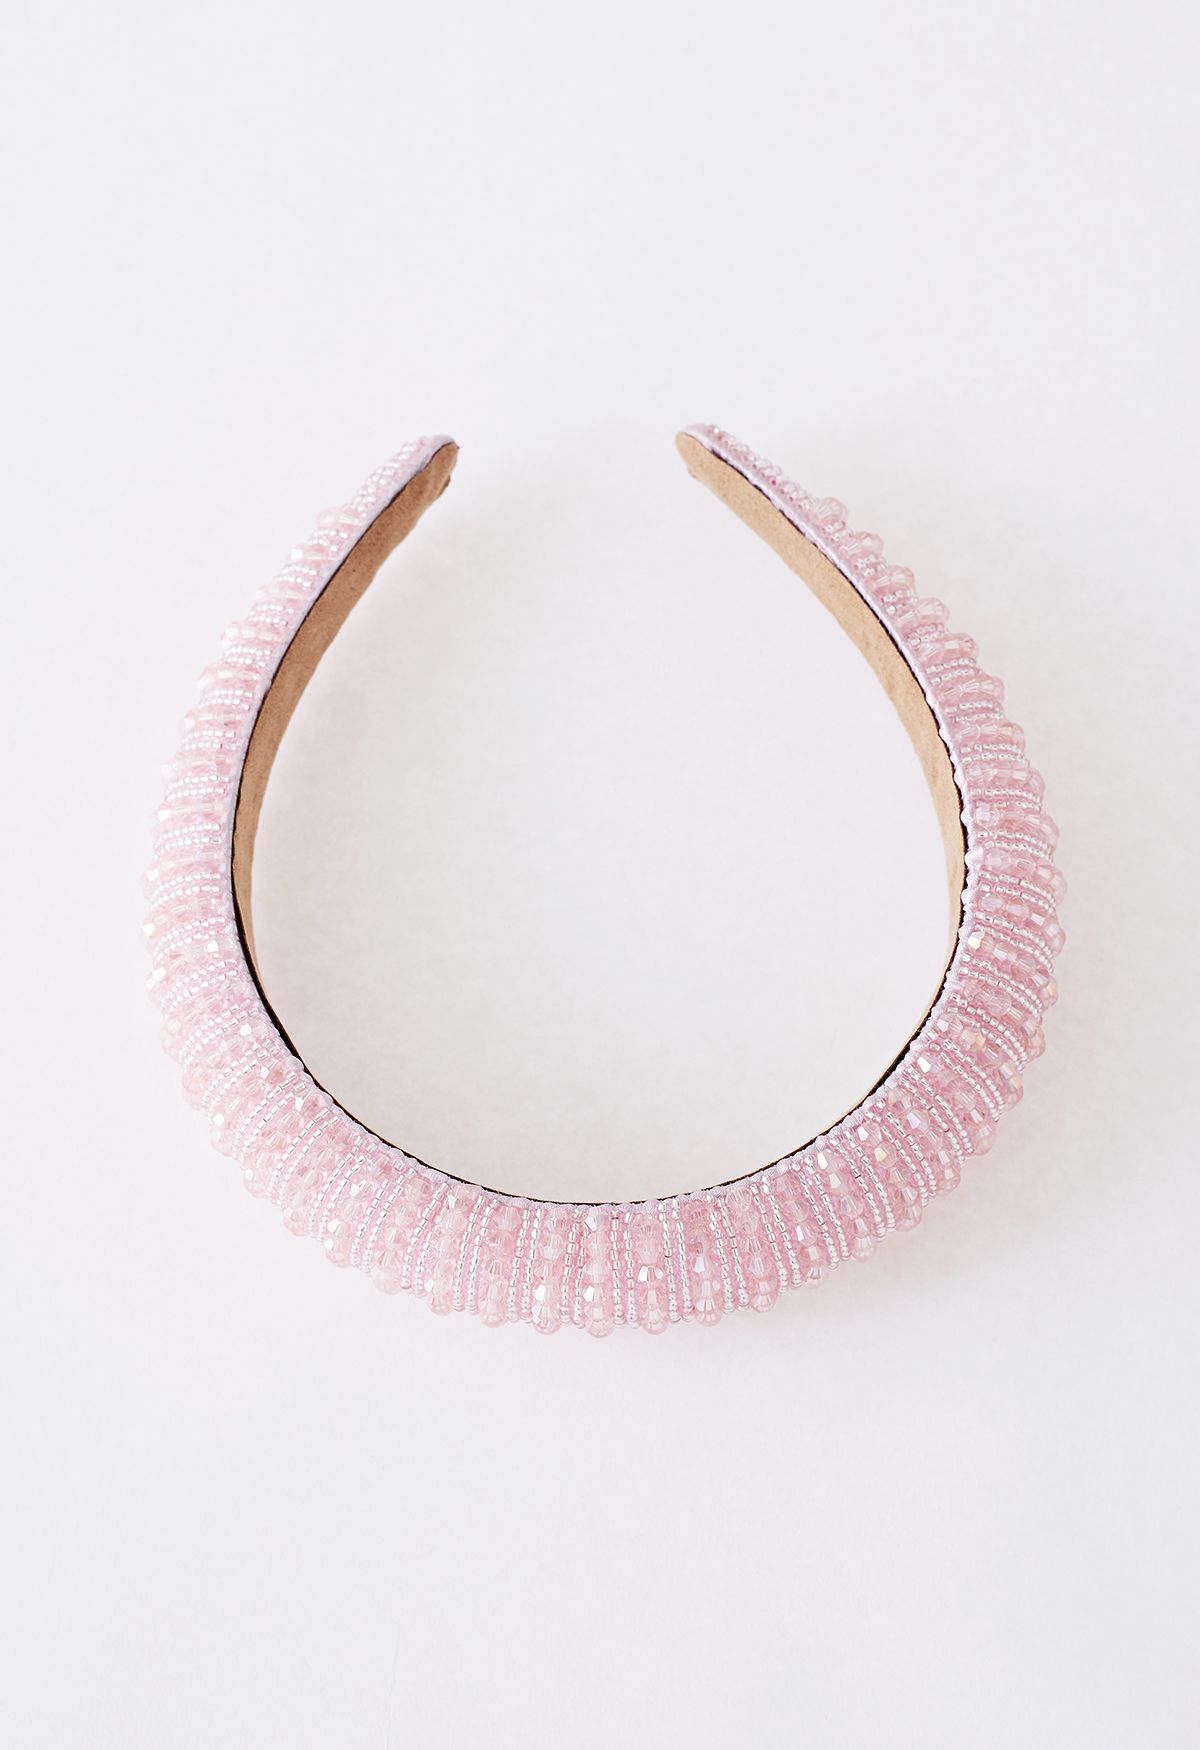 Full Rhinestone Crystal Headband in Pink